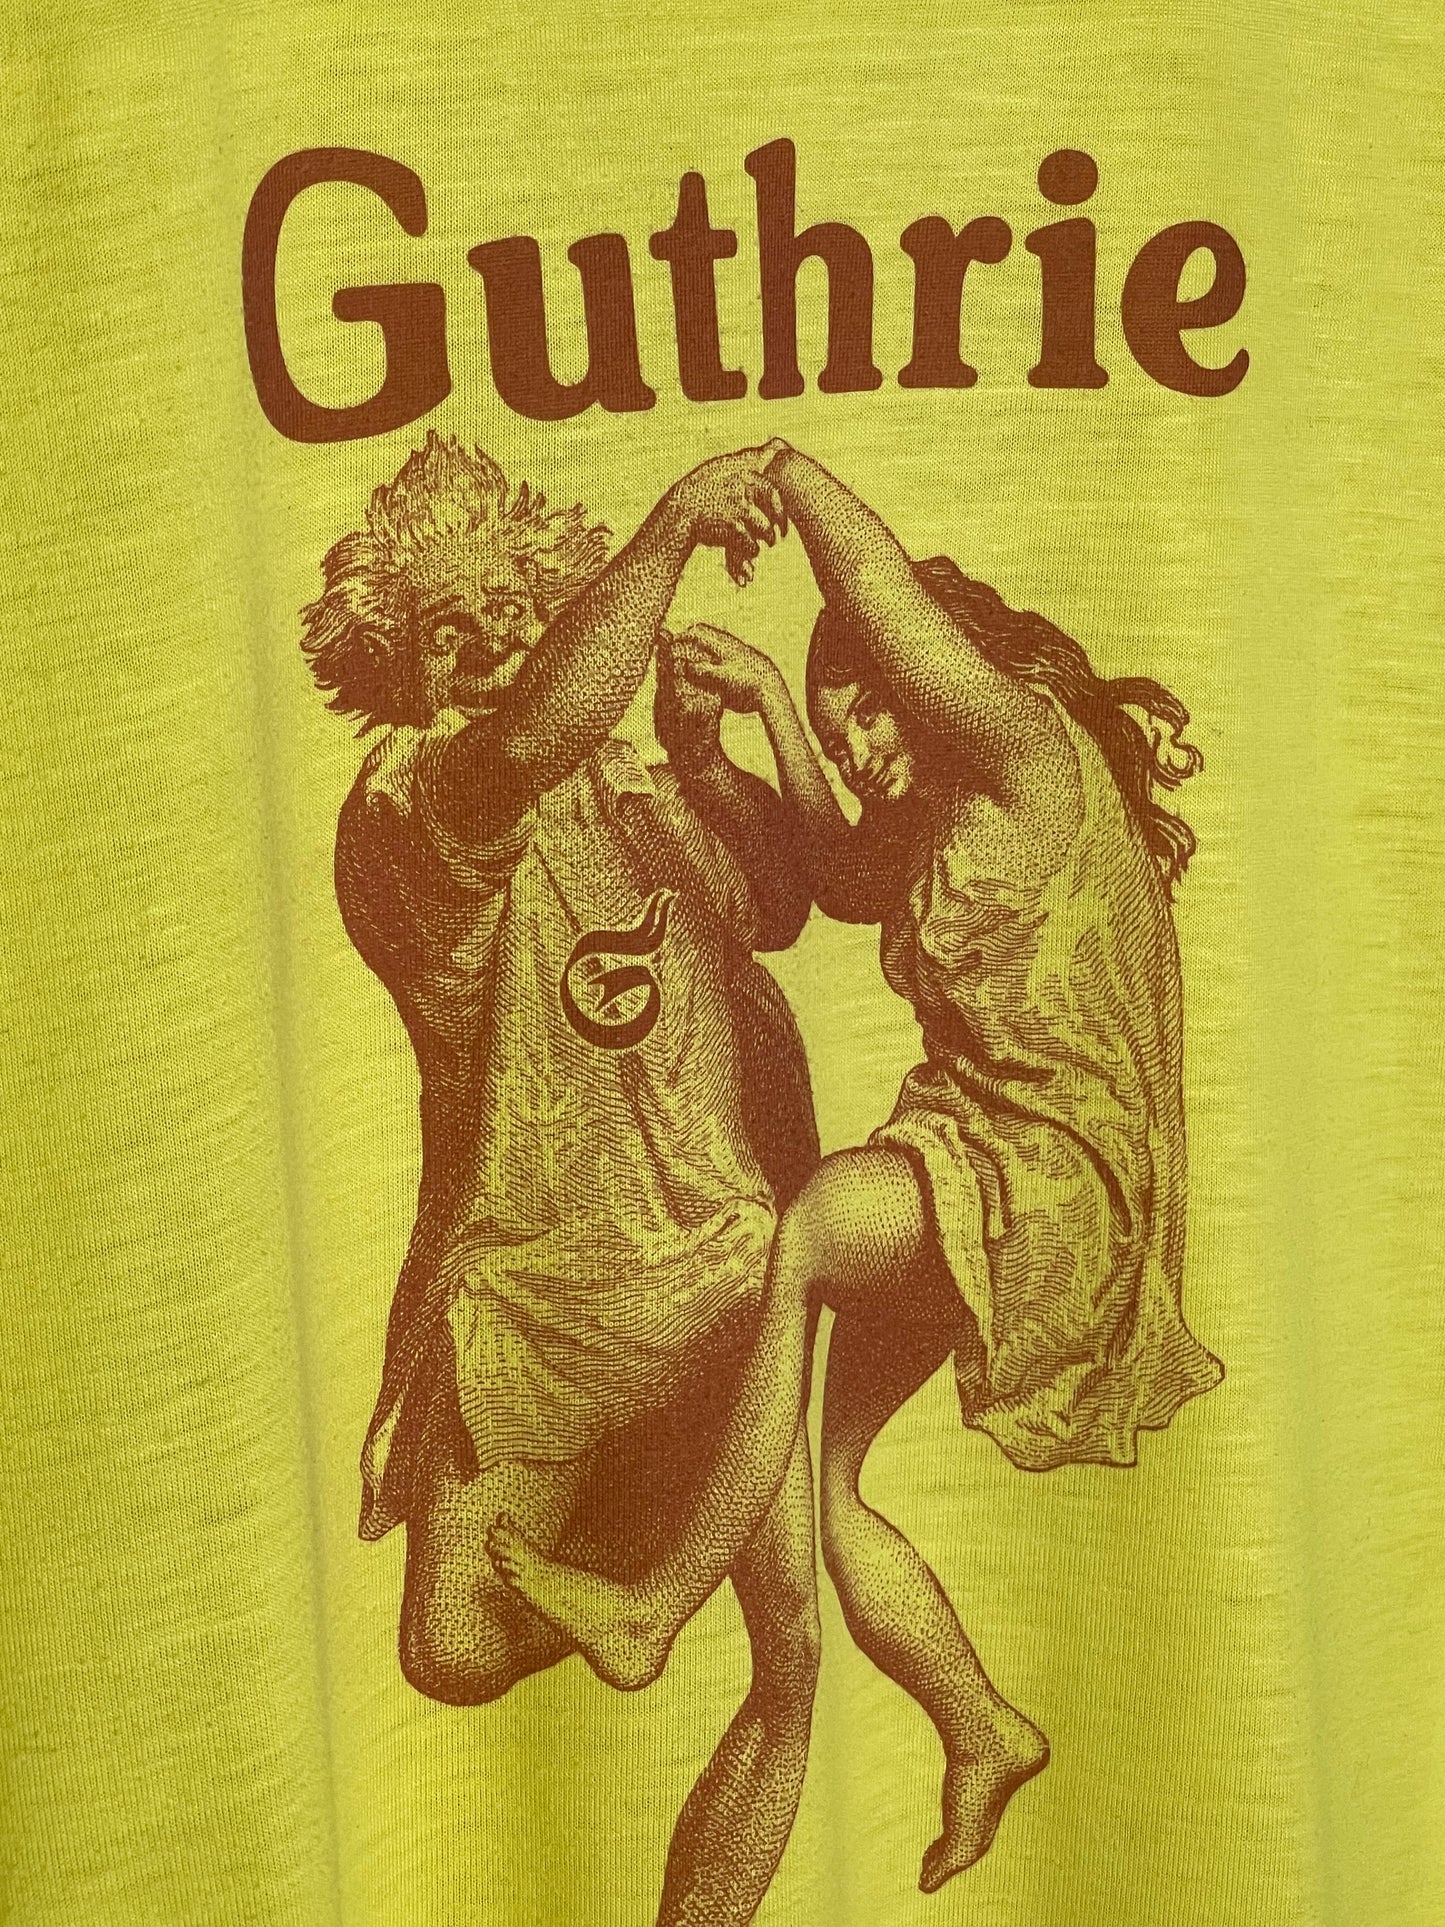 Vintage 70’s Guthrie Theater t-shirt XL